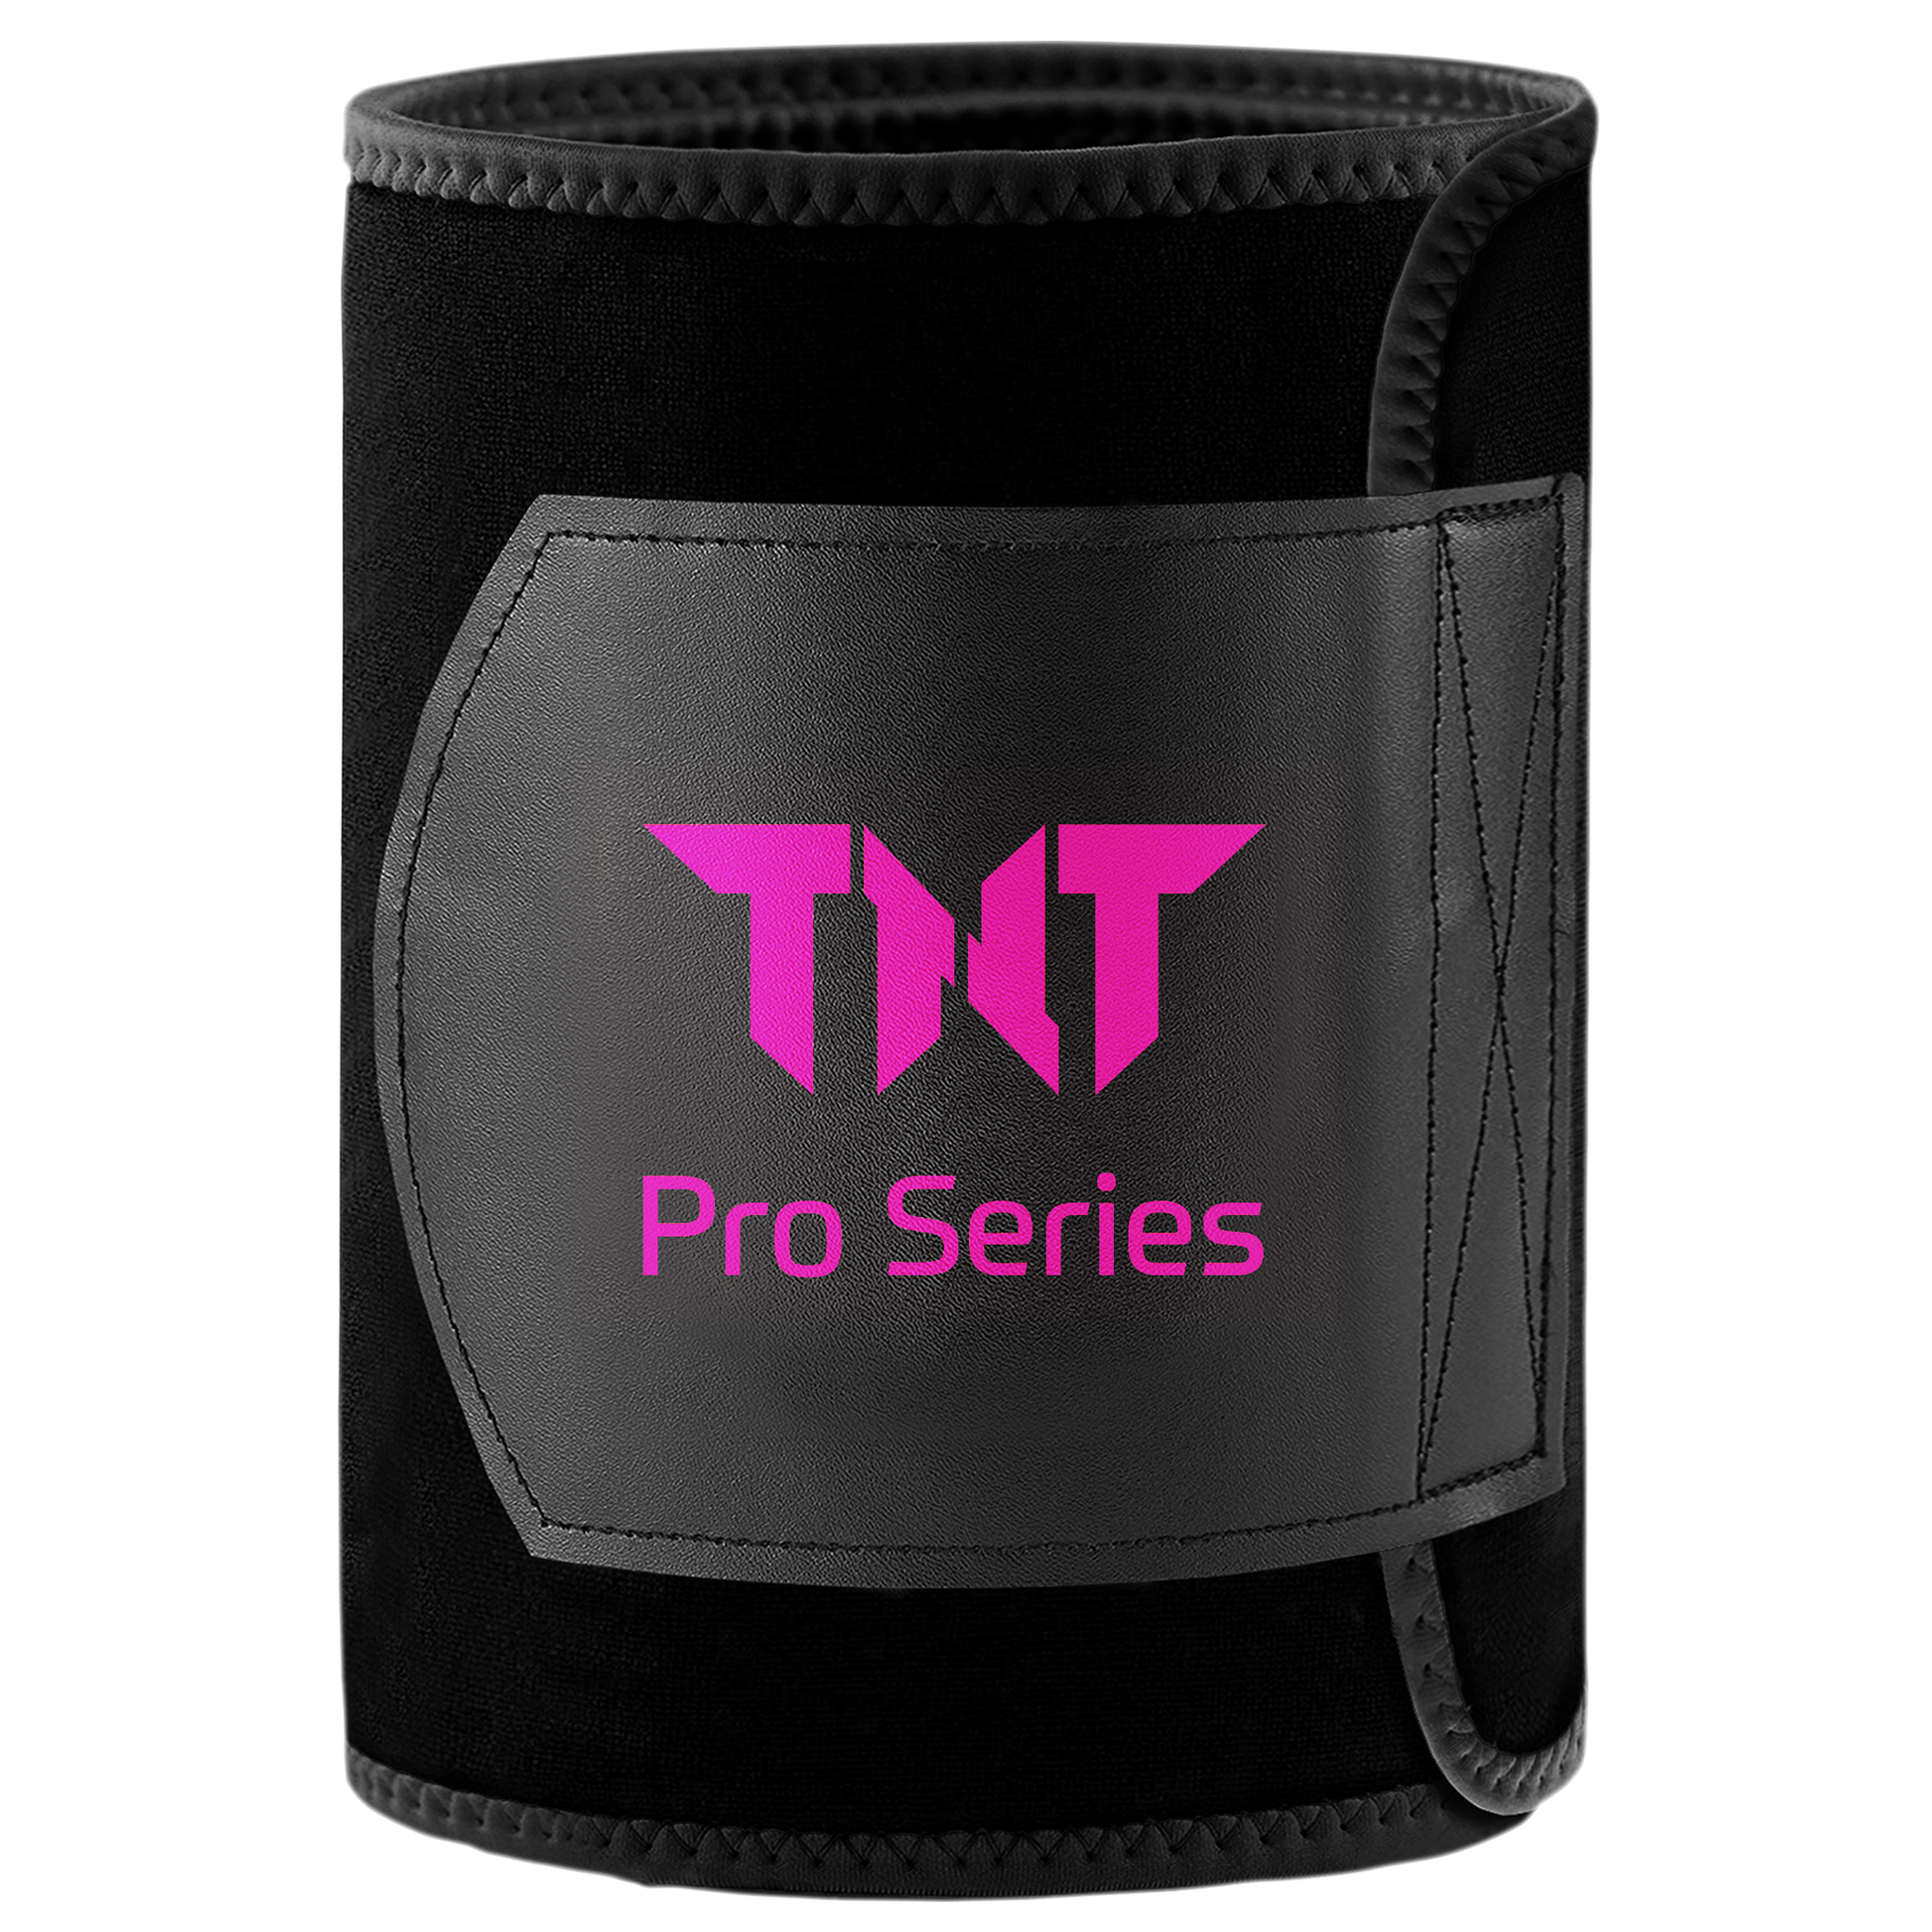 TNT Pro Series Waist Trimmer for Women and Men - Waist Trainer for